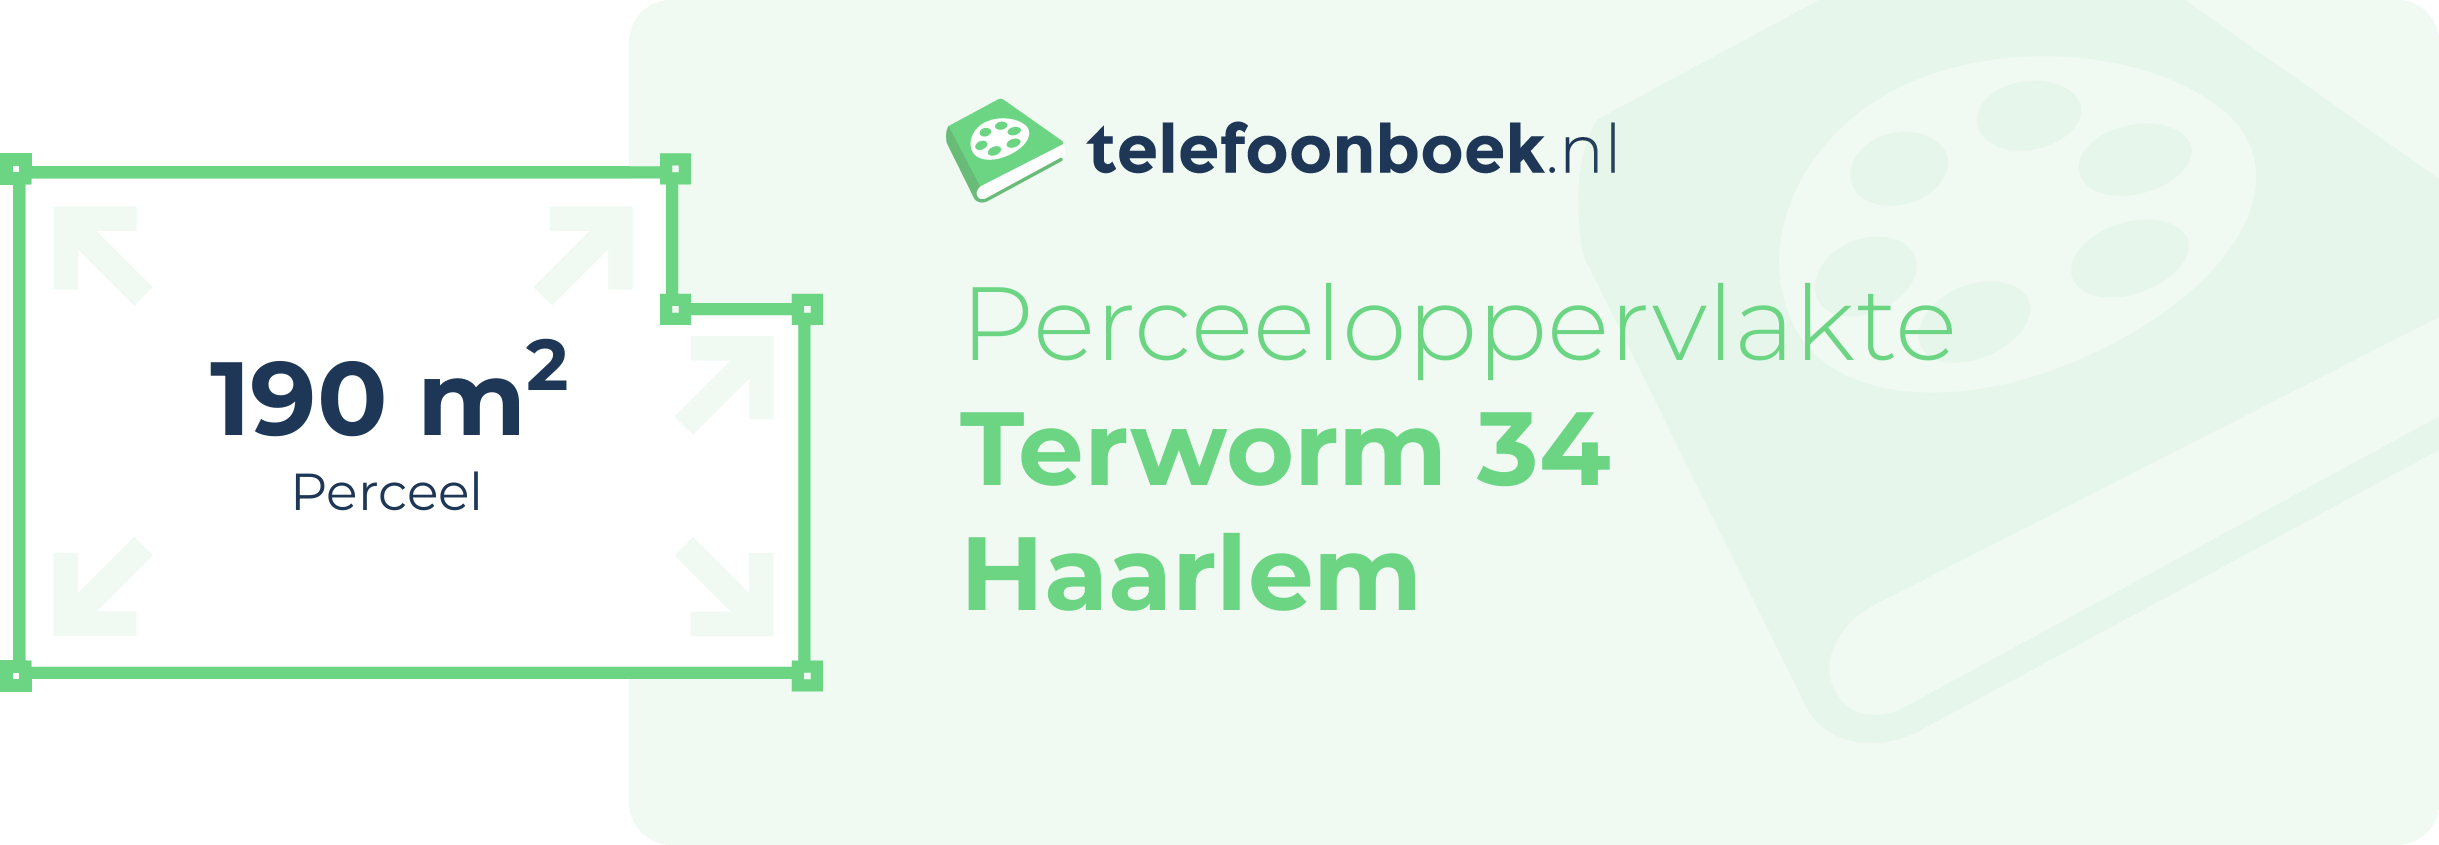 Perceeloppervlakte Terworm 34 Haarlem